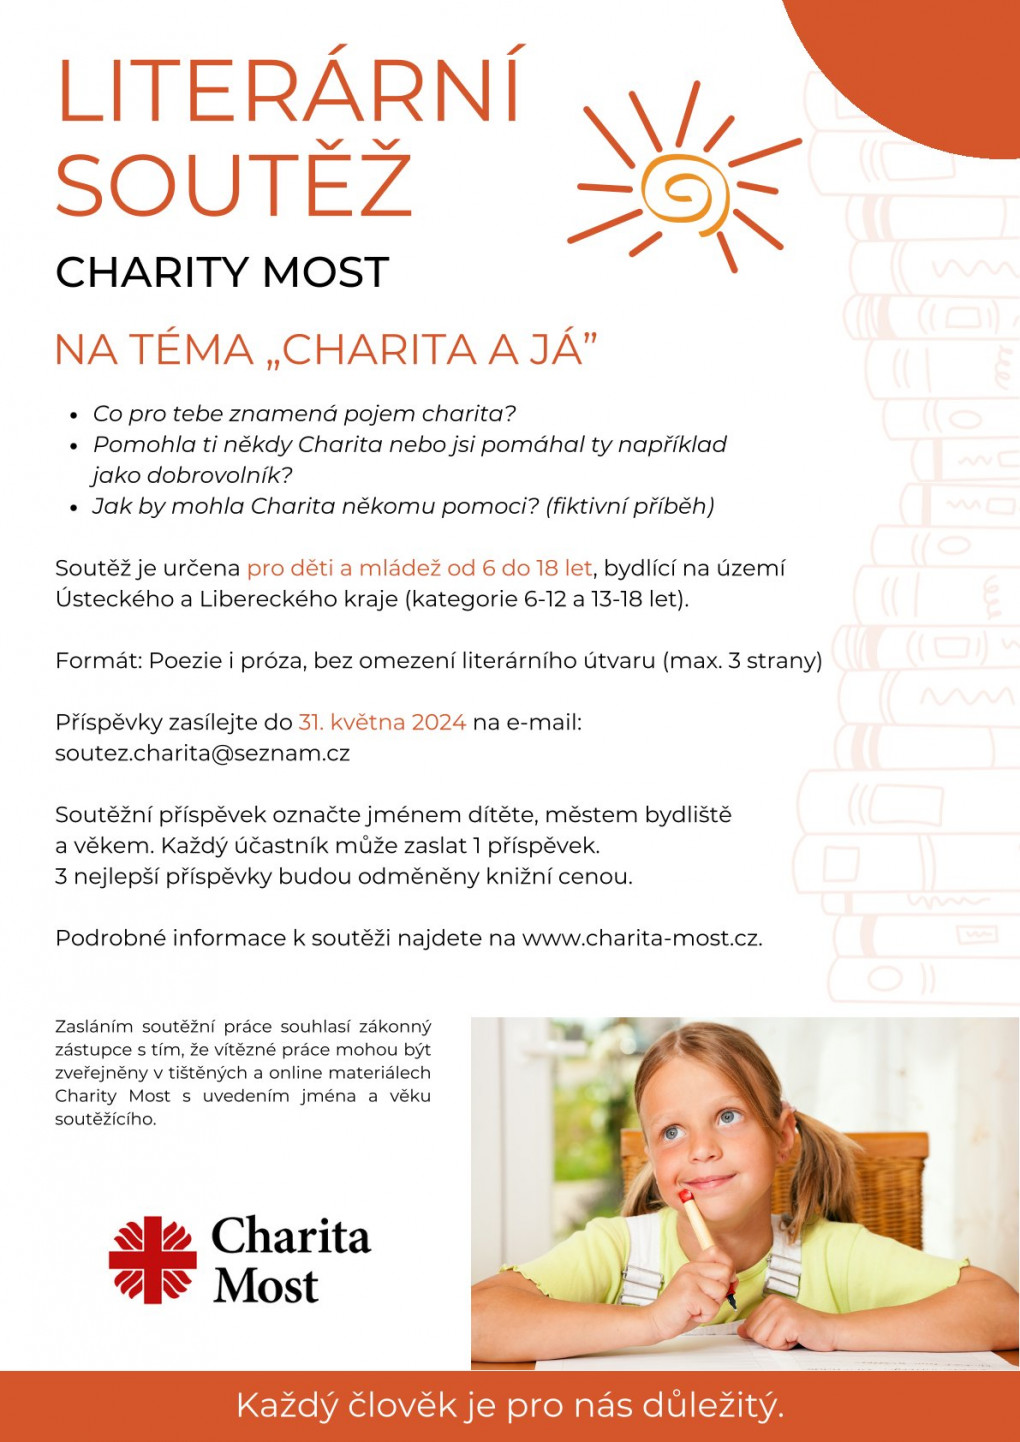 literarni_soutez_charity_most.jpg